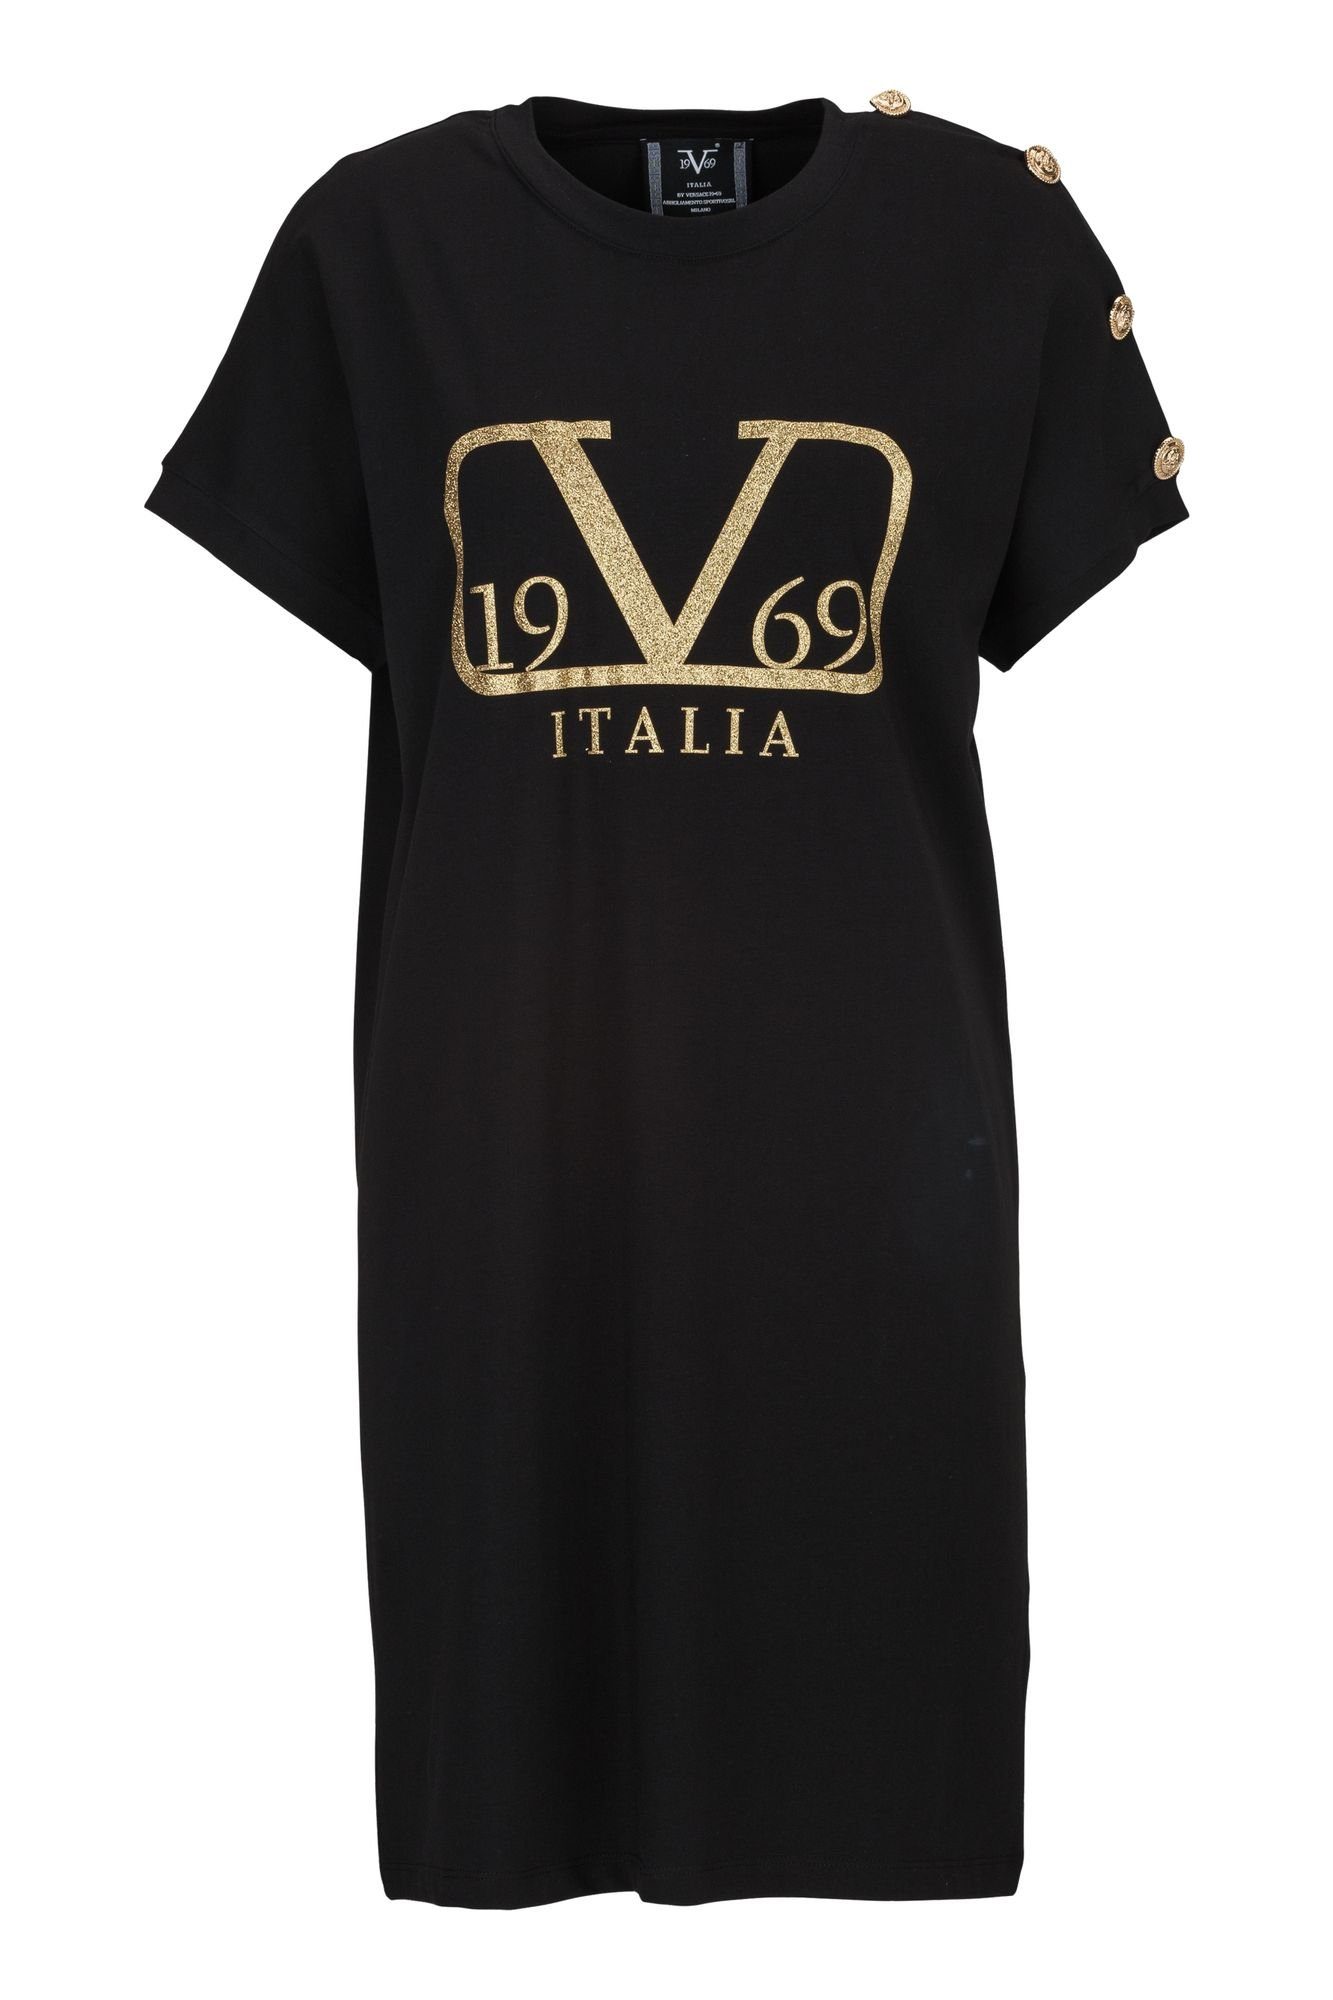 19V69 Italia by Versace T-Shirt Dana